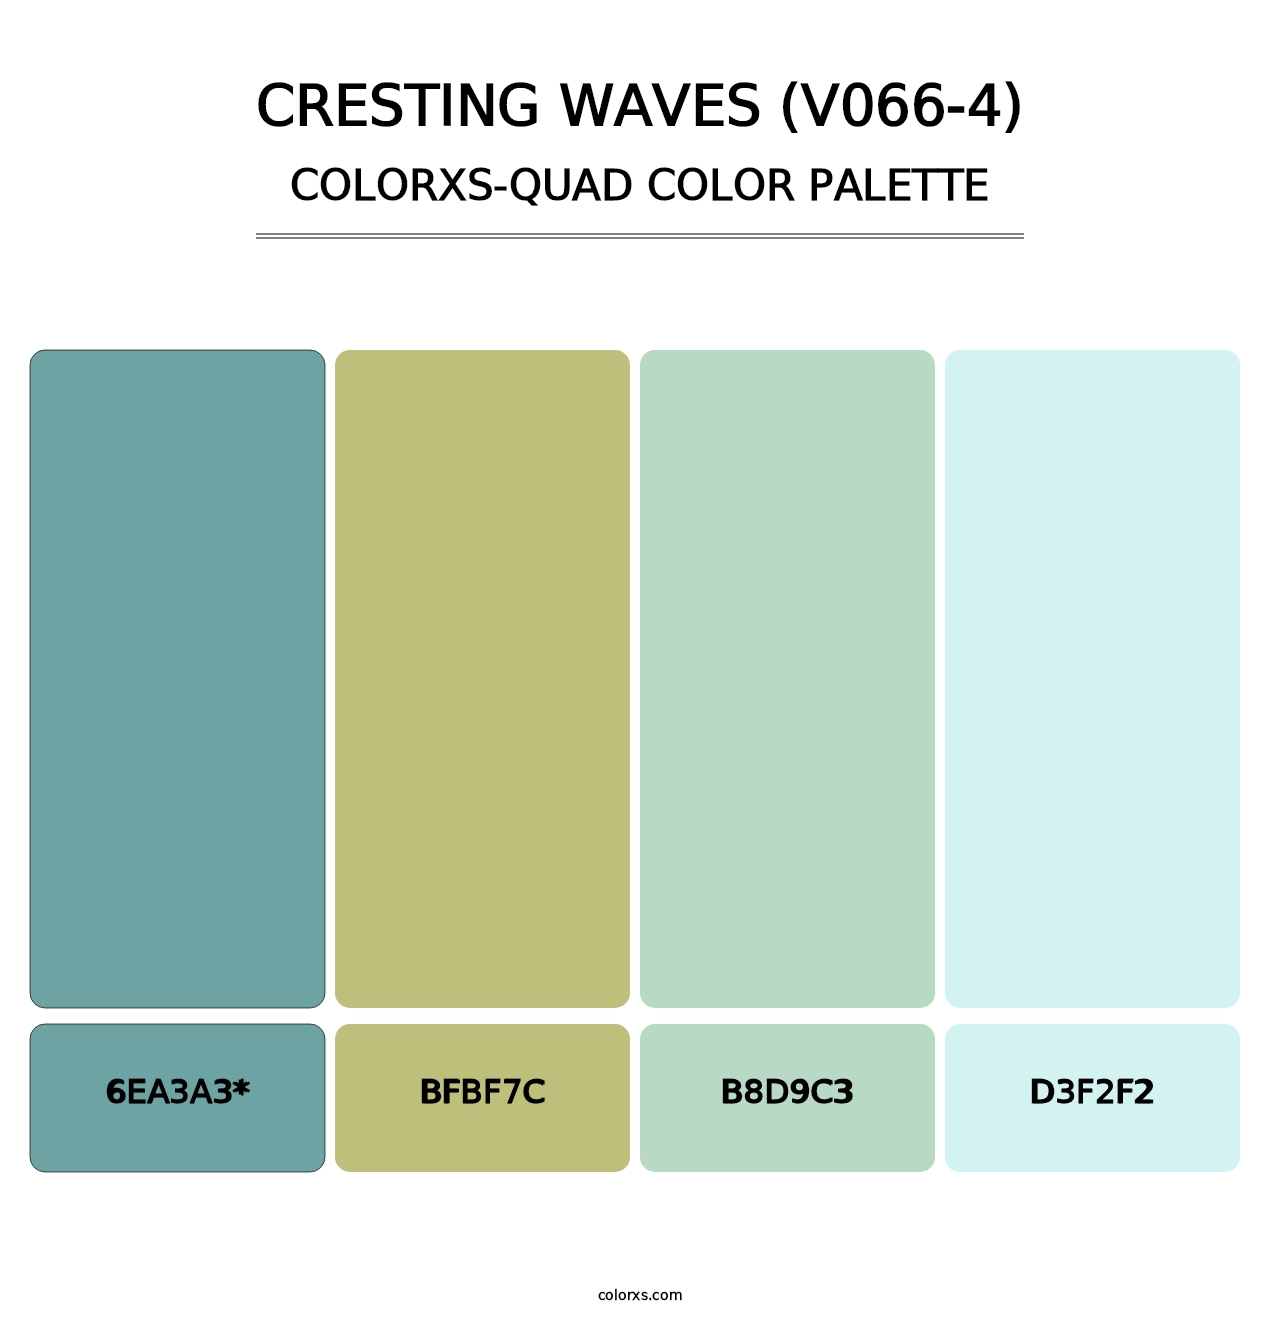 Cresting Waves (V066-4) - Colorxs Quad Palette